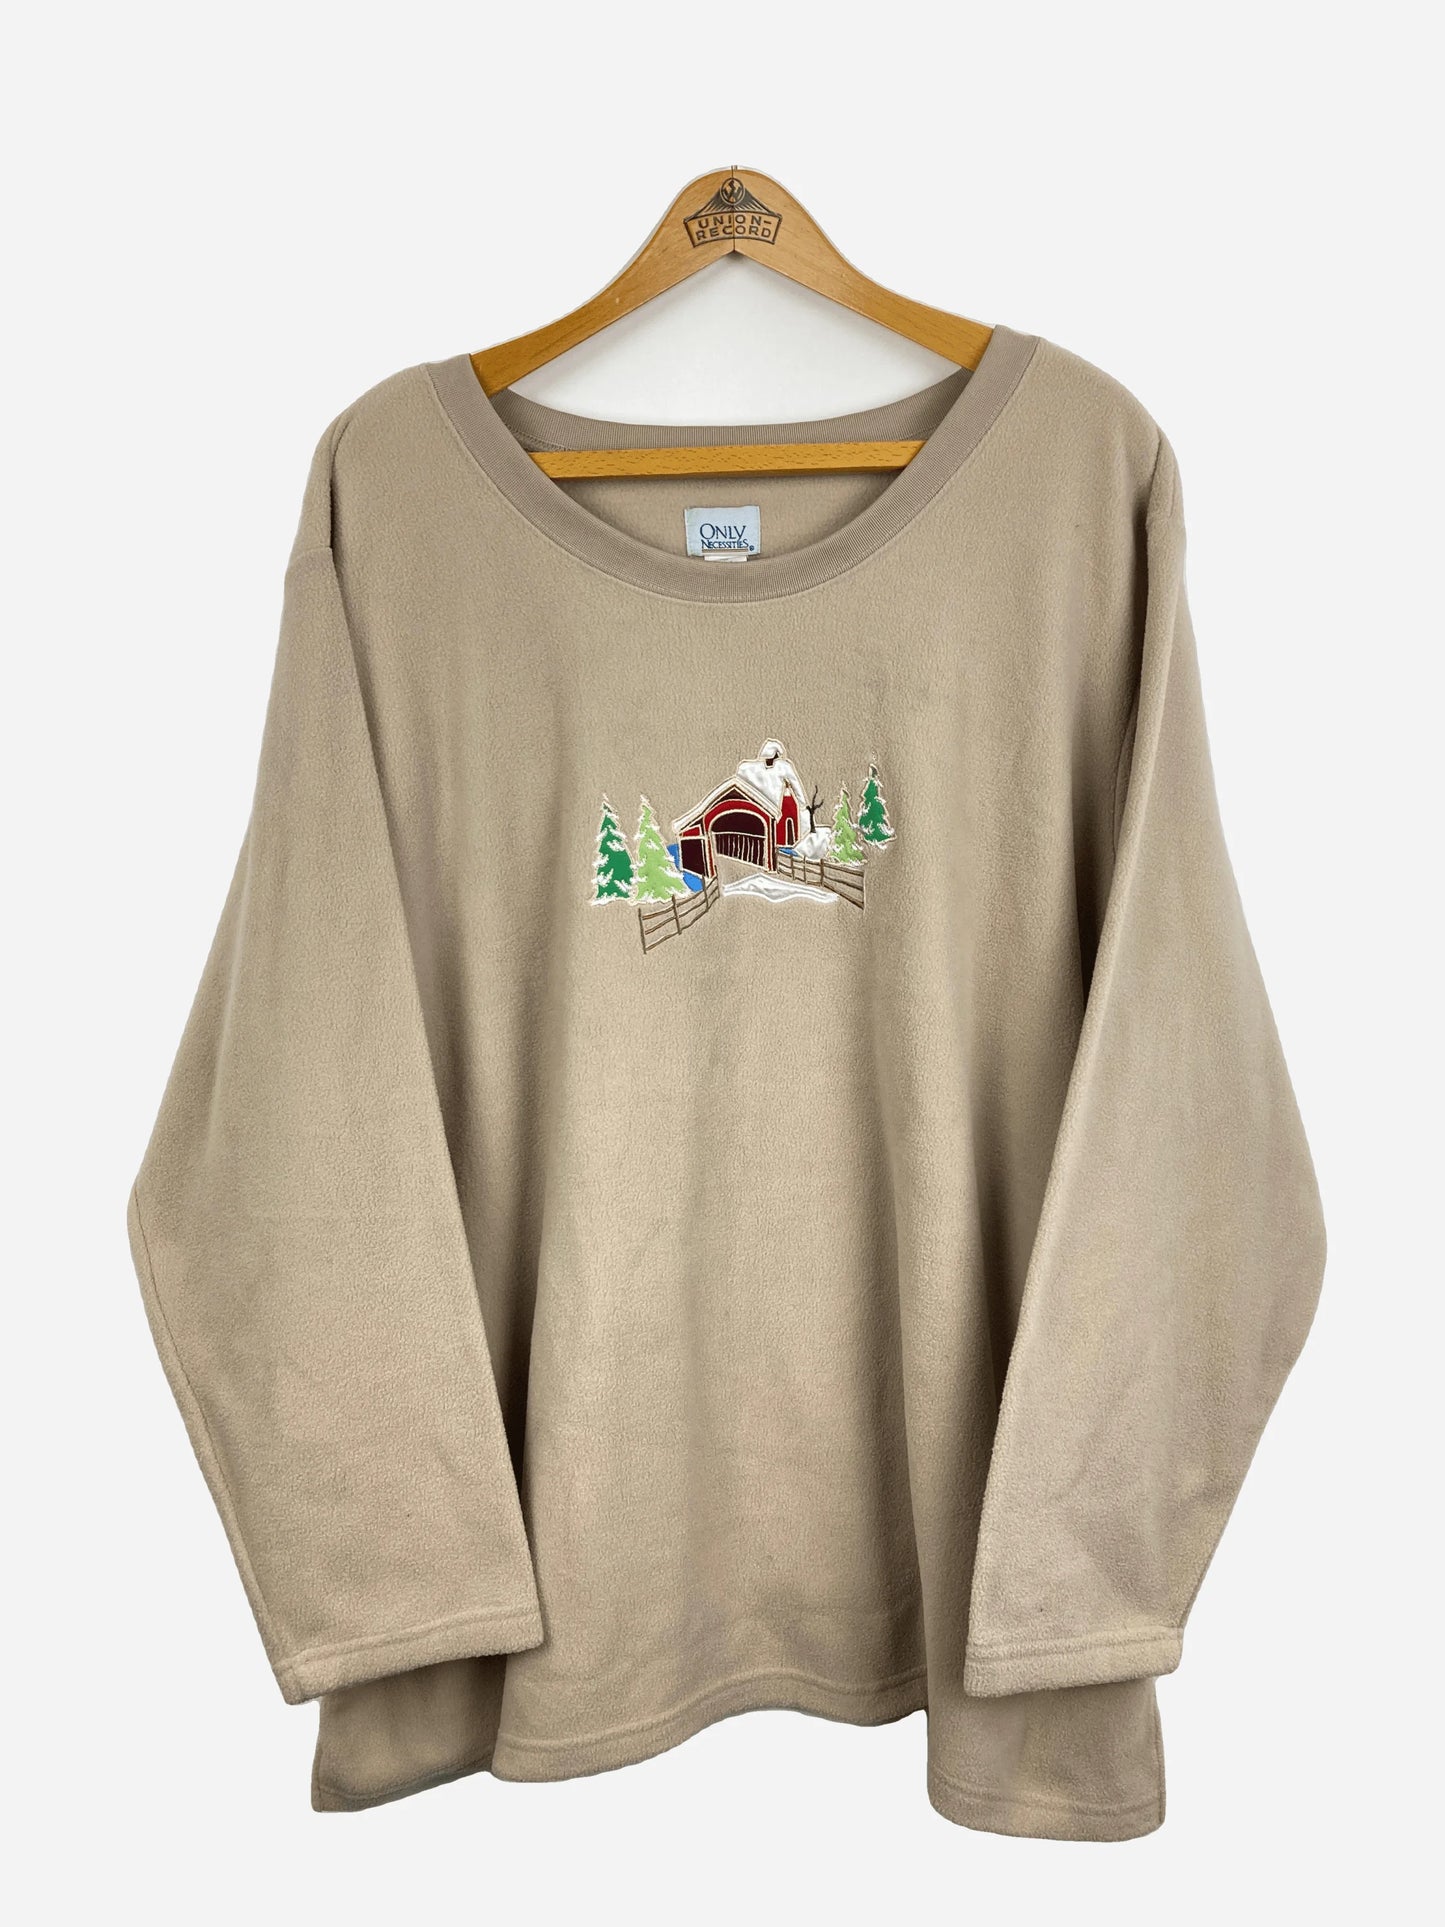 Winter fleece sweater (XXL)